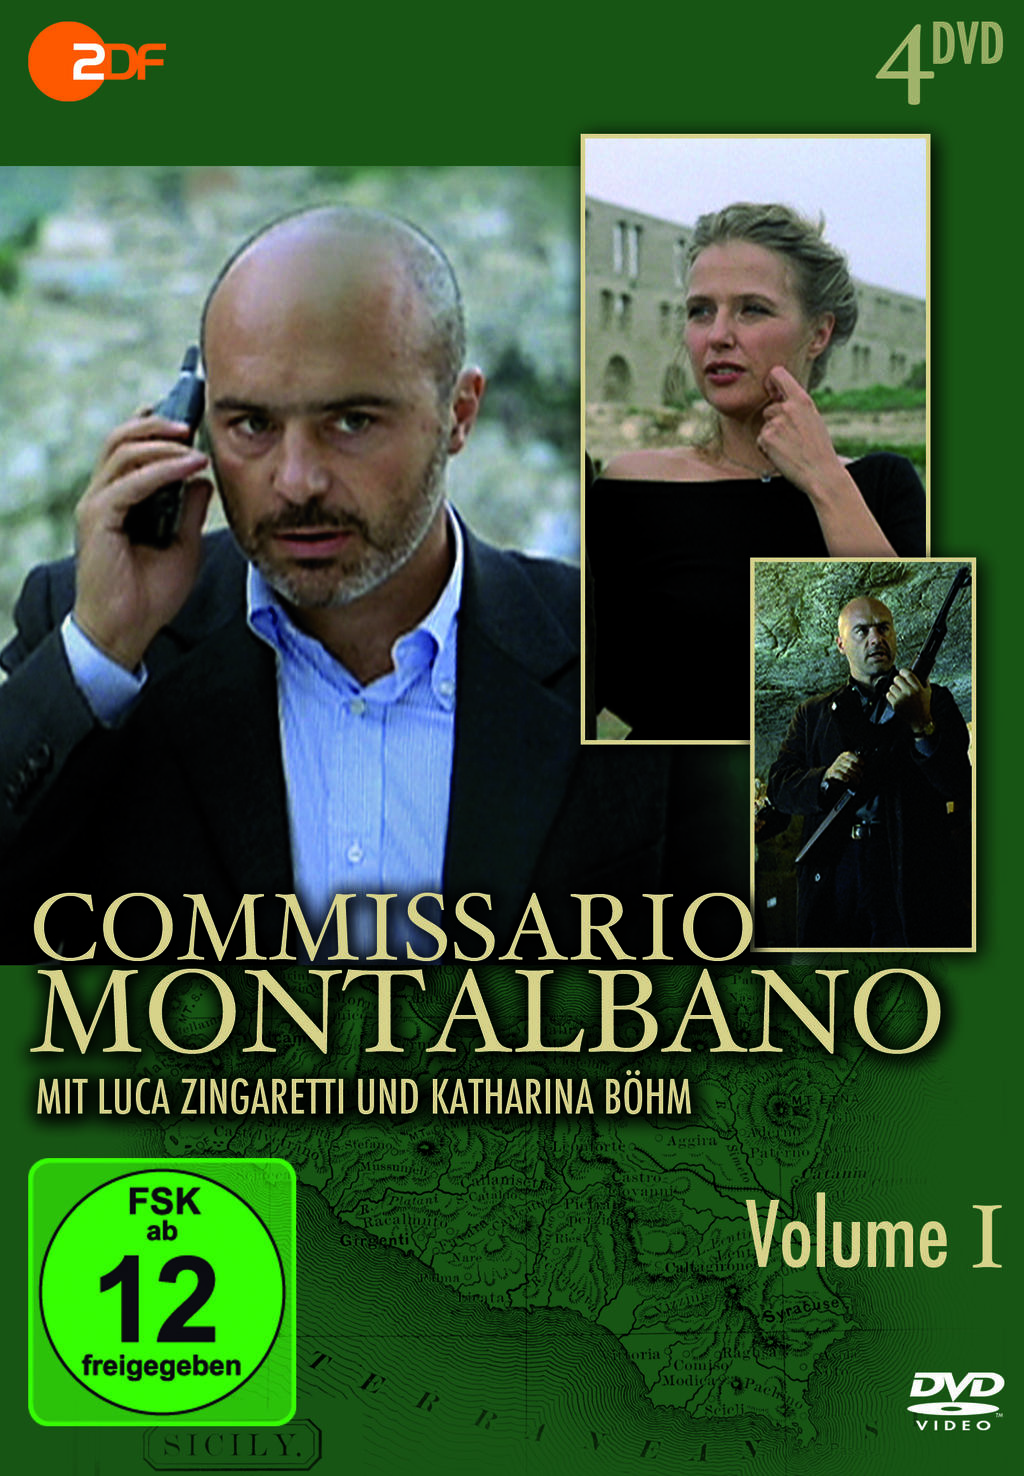 Commissario Montalbano: La vampa d'agosto | Season 7 | Episode 1